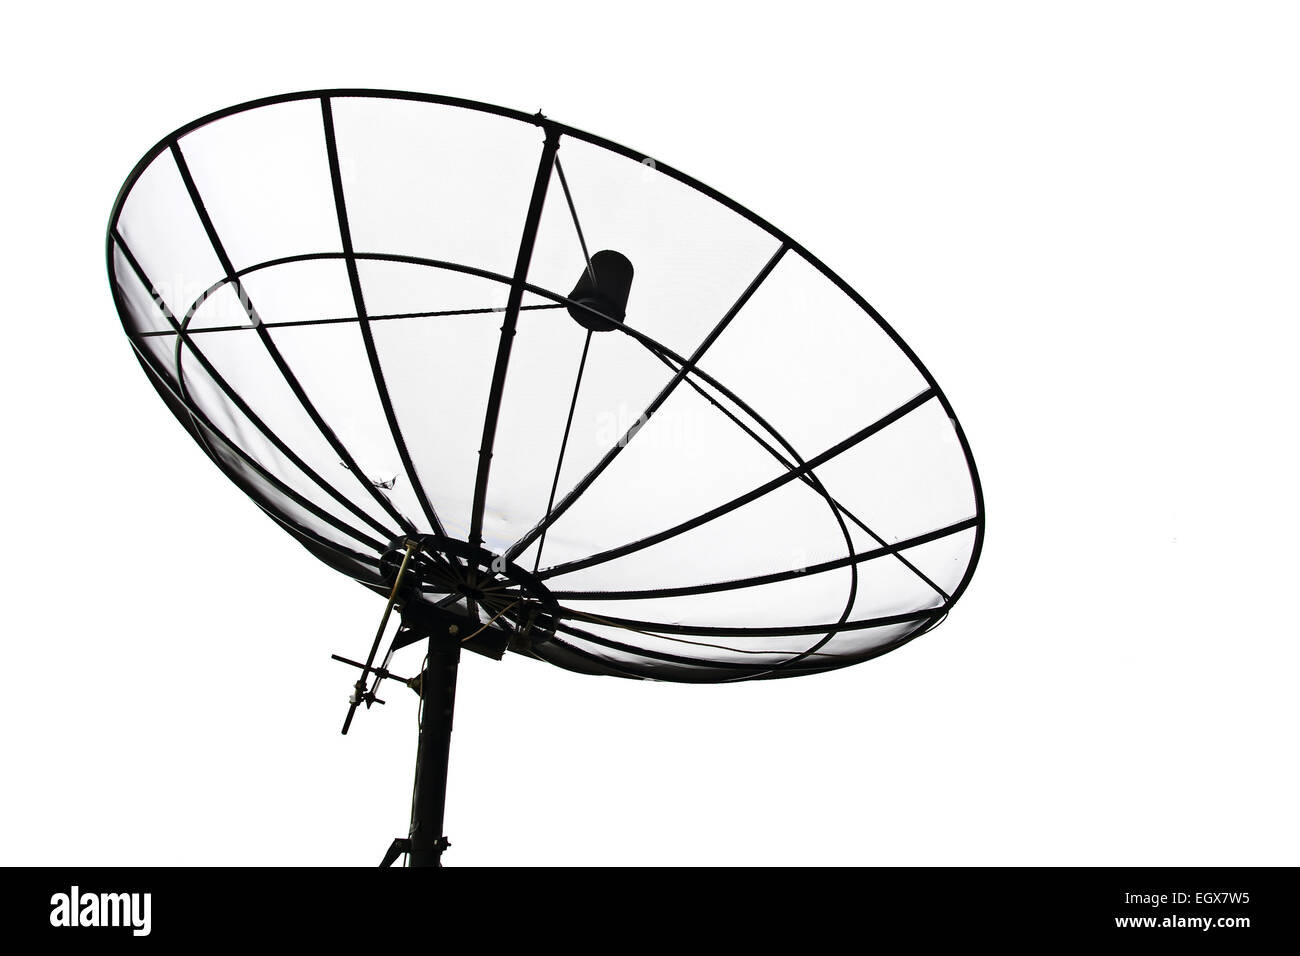 Televisión Por Satélite O Internet Concepto Antena Parabólica 3d Render En  Blanco Sin Sombra Stock de ilustración - Ilustración de sombra, satélite:  174755514